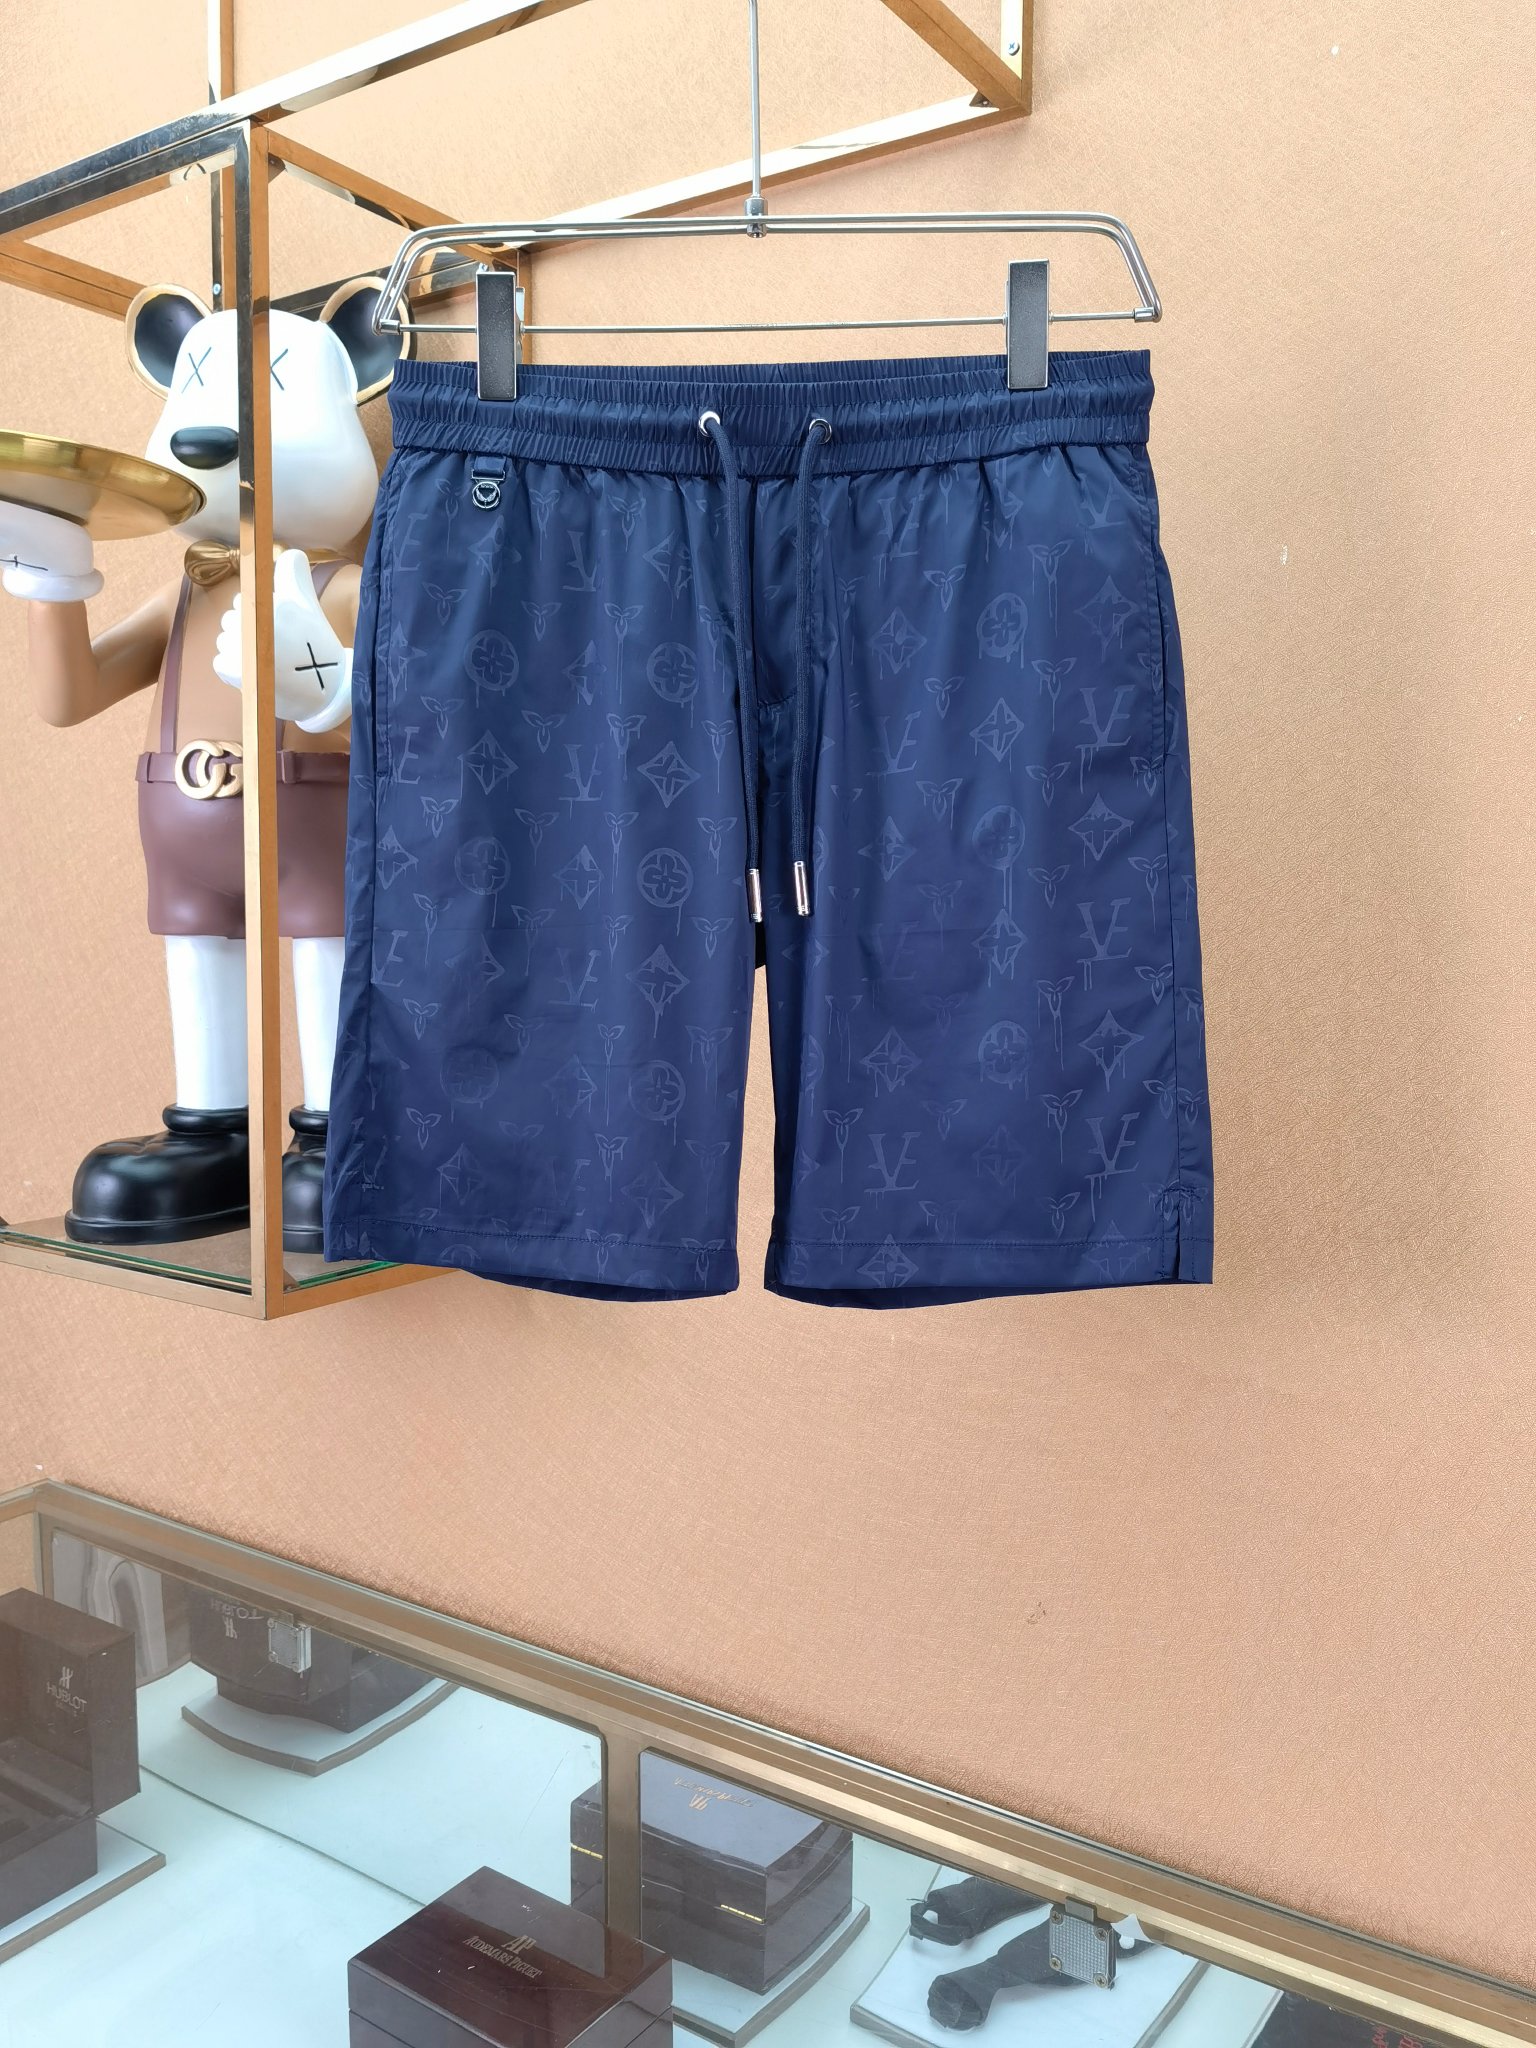 Louis Vuitton Clothing Shorts Men Summer Collection Casual